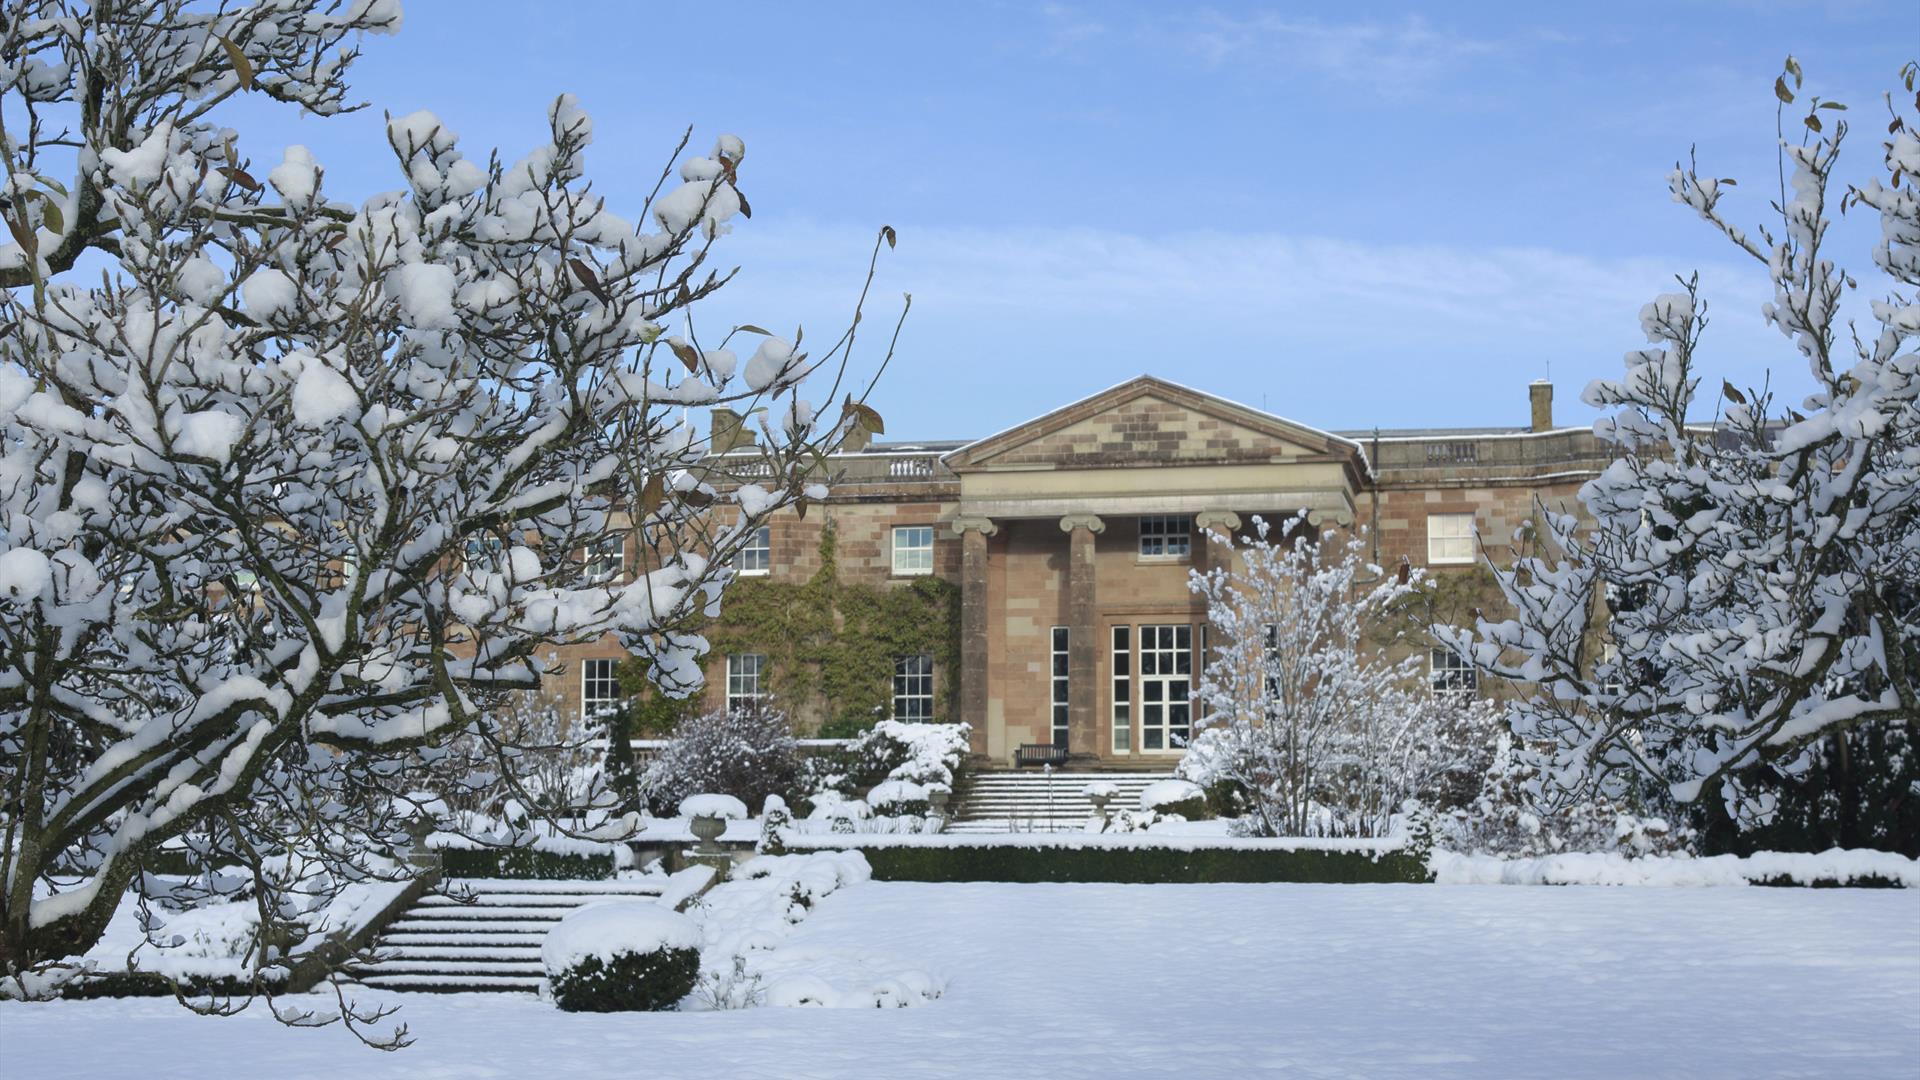 Hillsborough Castle in the snow